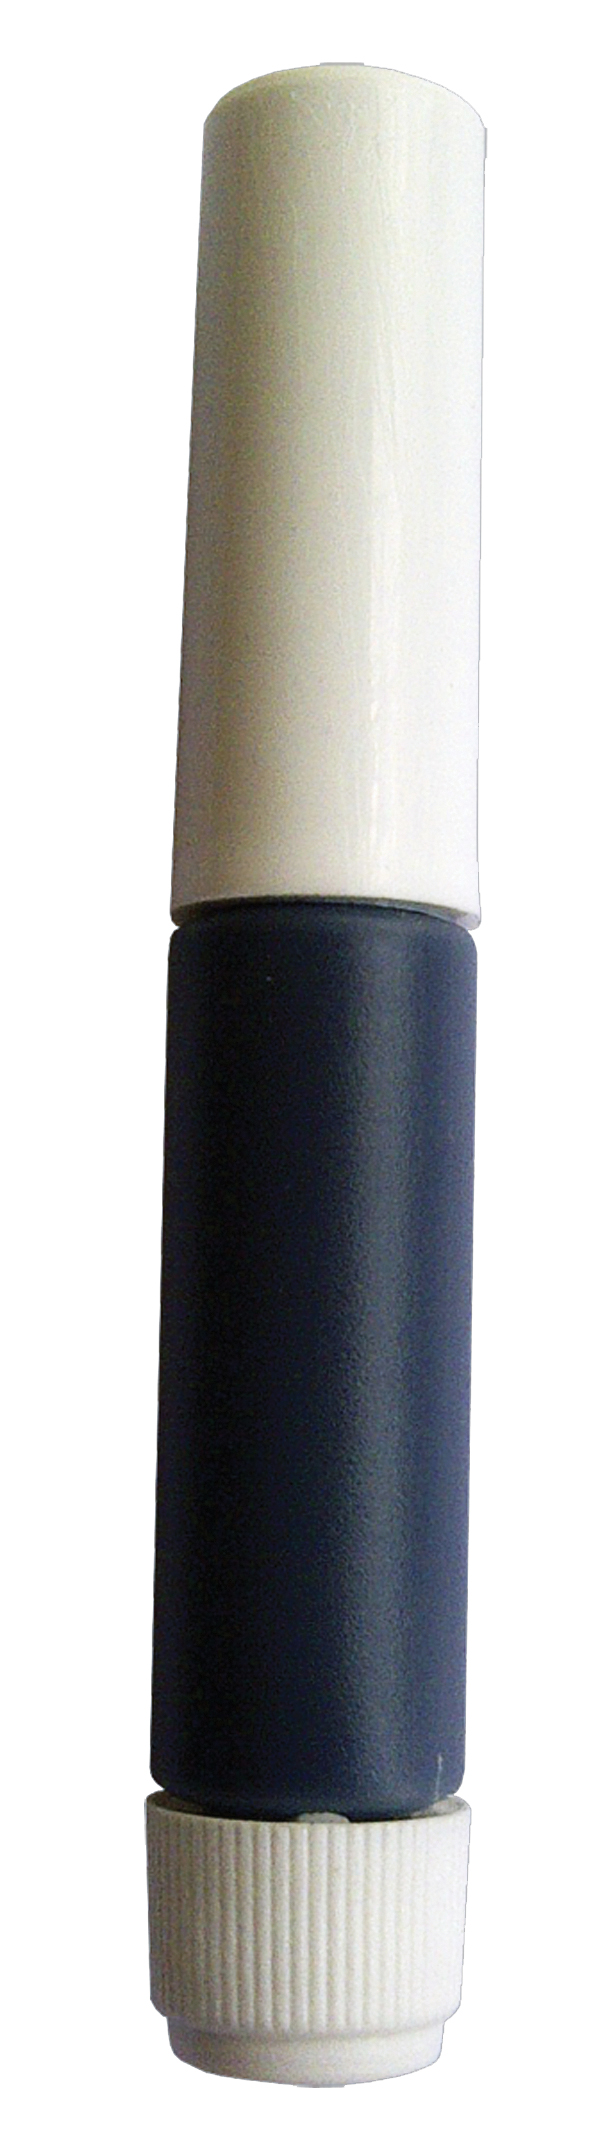 Black Ink Re-fill for Self Inking Stamp. 1.5ml bottle